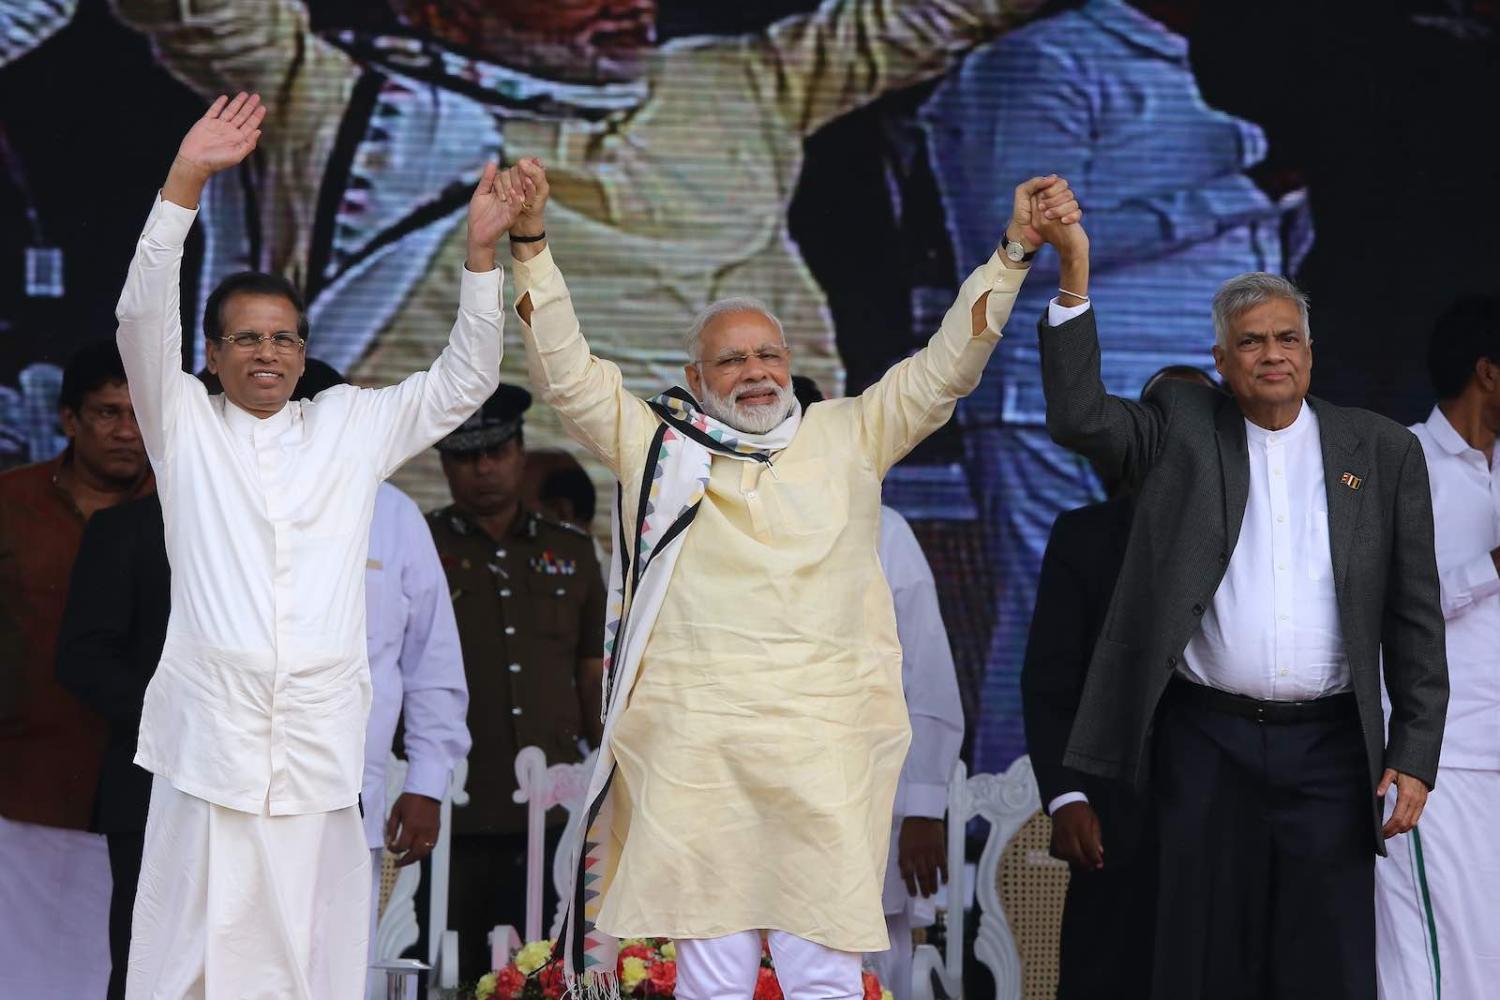 Indian Prime Minister Narendra Modi (centre) with Sri Lankan President Maithripala Sirisena (L) and Sri Lankan Prime Minister Ranil Wickremesinghe during a rally in Norwood, Sri Lanka, May 2017 (Photo: Tharaka Basnayaka via Getty)